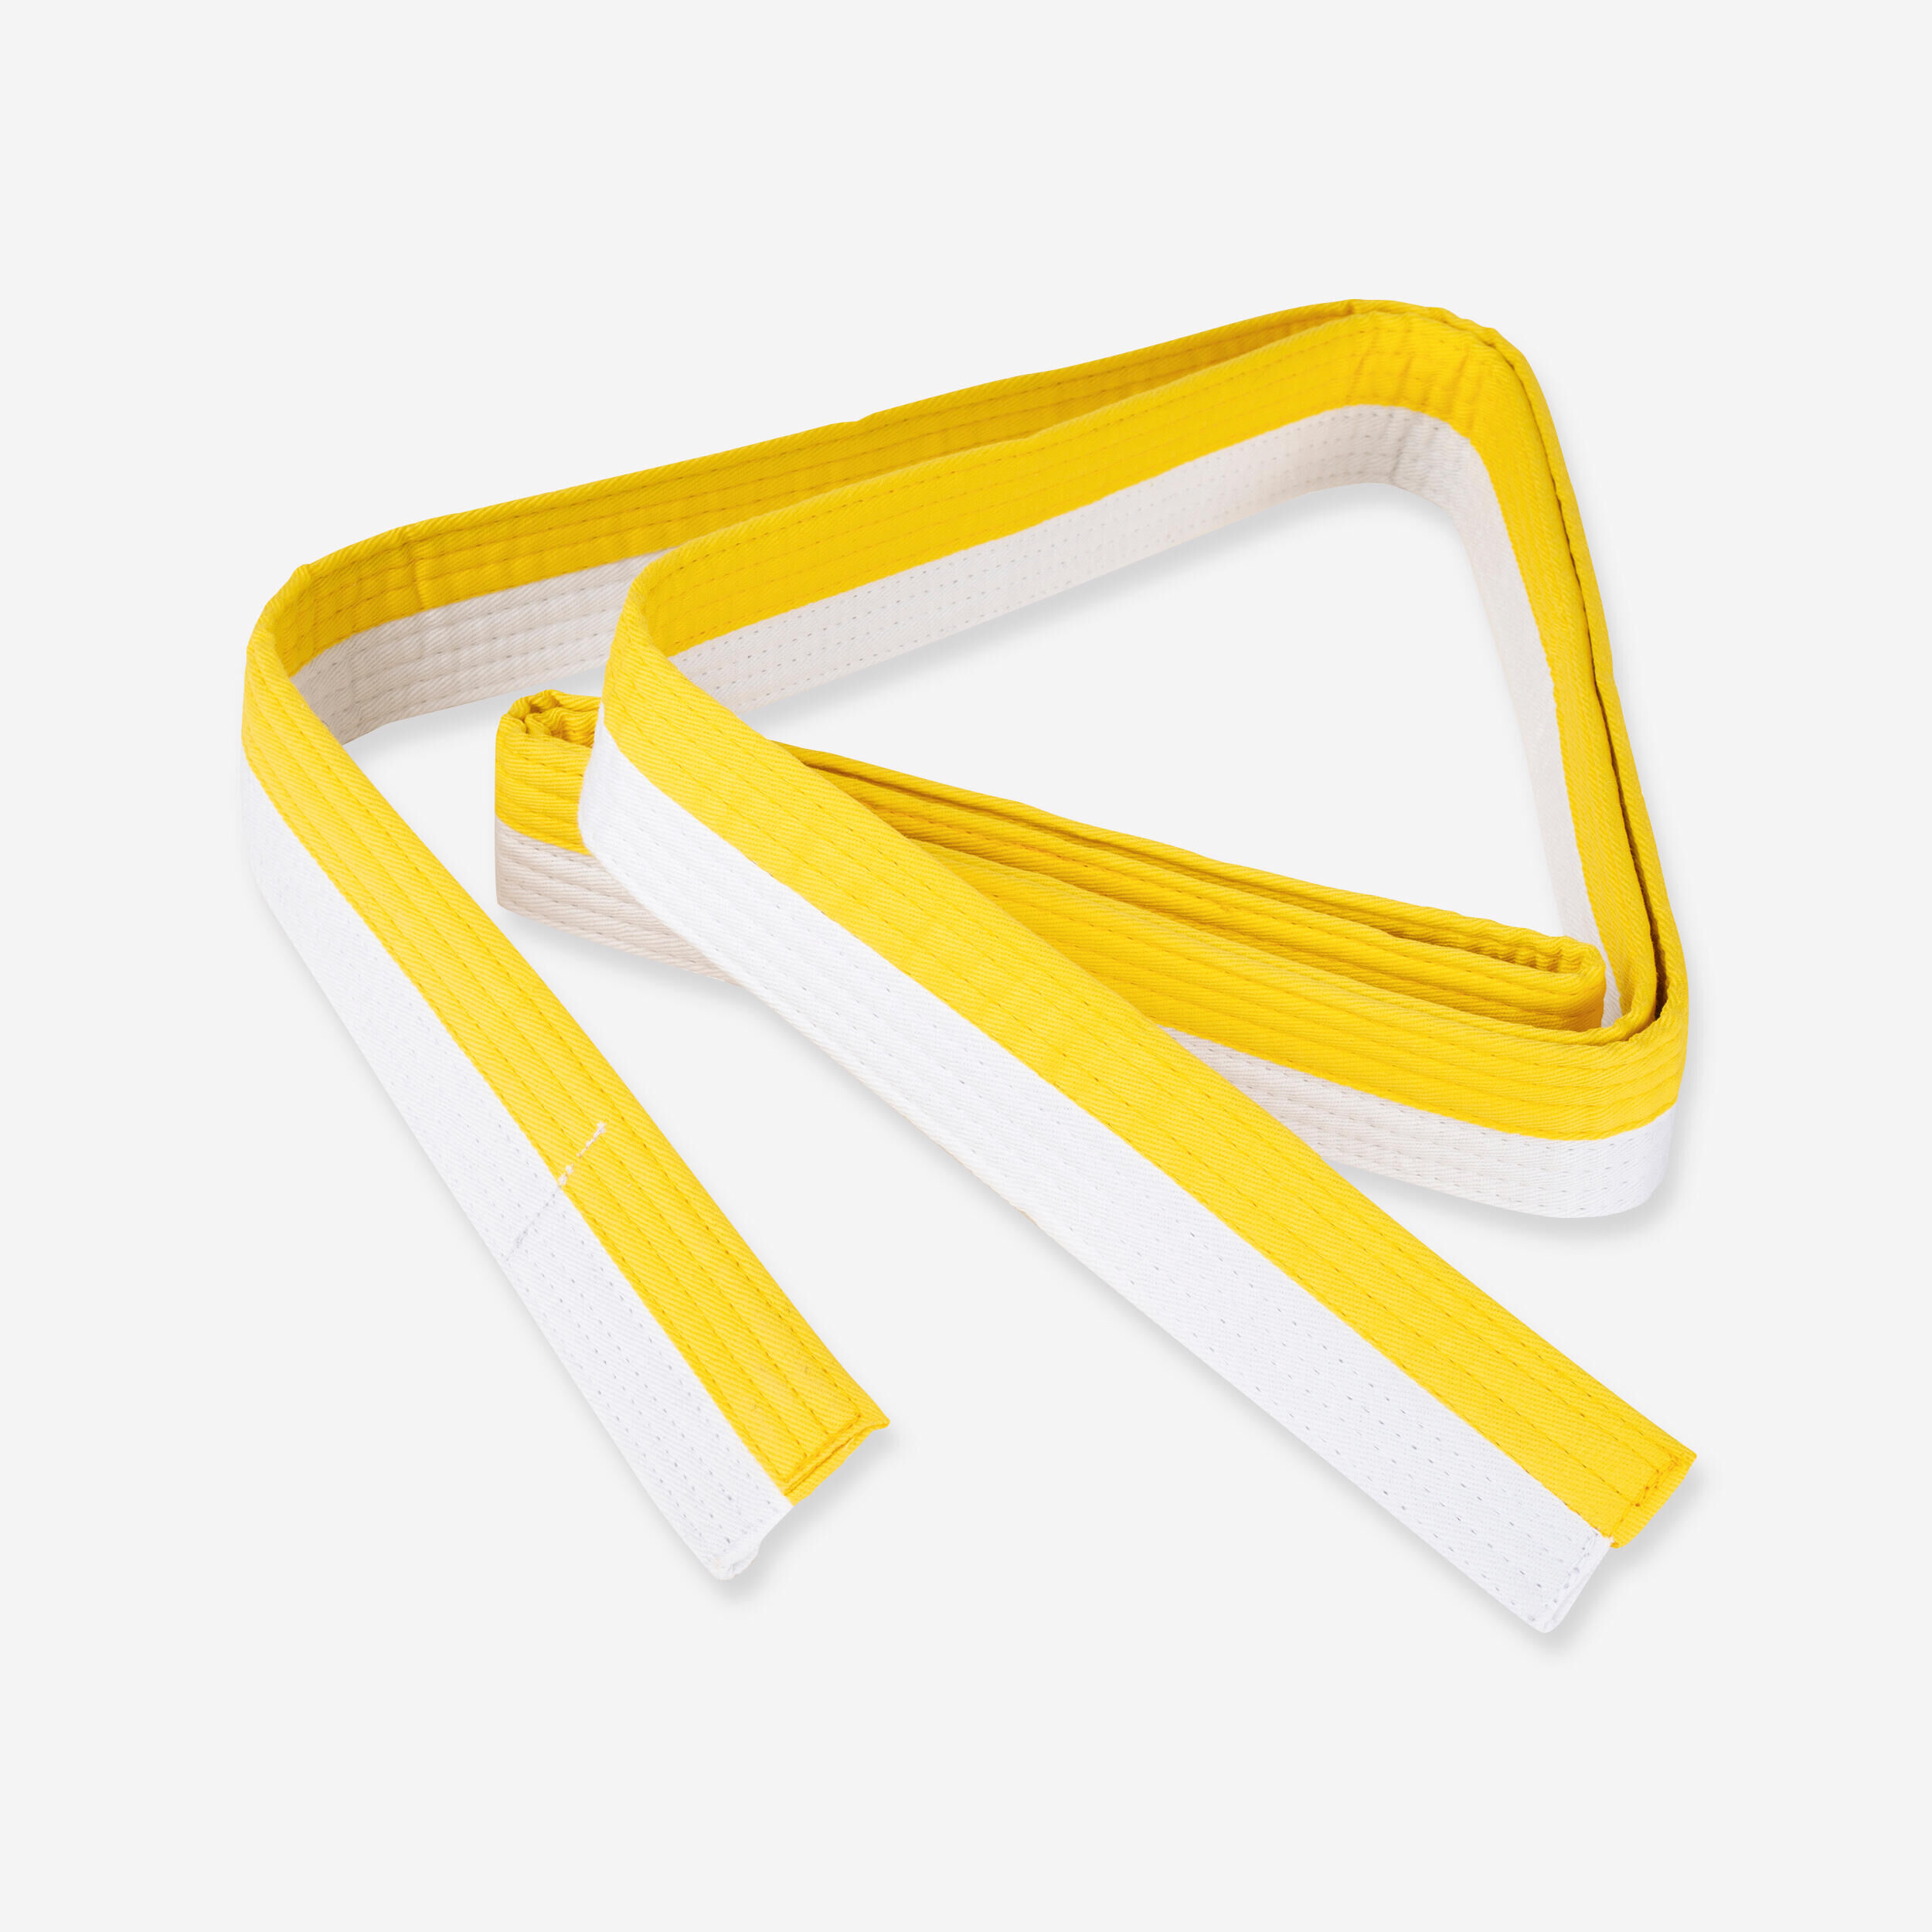 OUTSHOCK Piqué Belt 2.5 m - White/Yellow